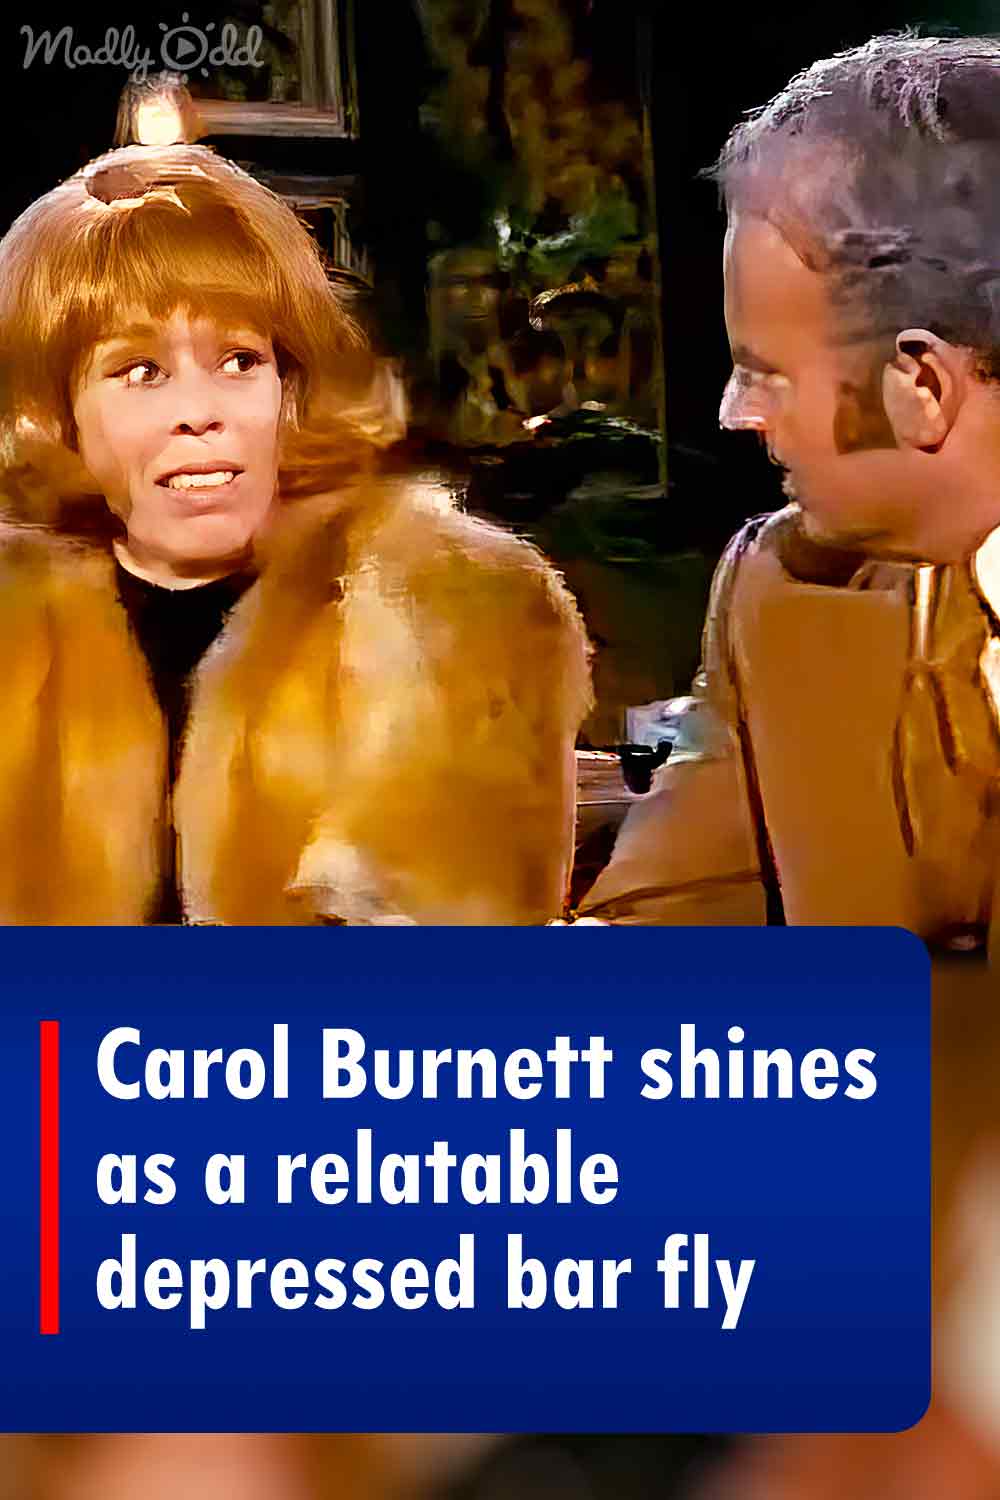 Carol Burnett shines as a relatable bar fly